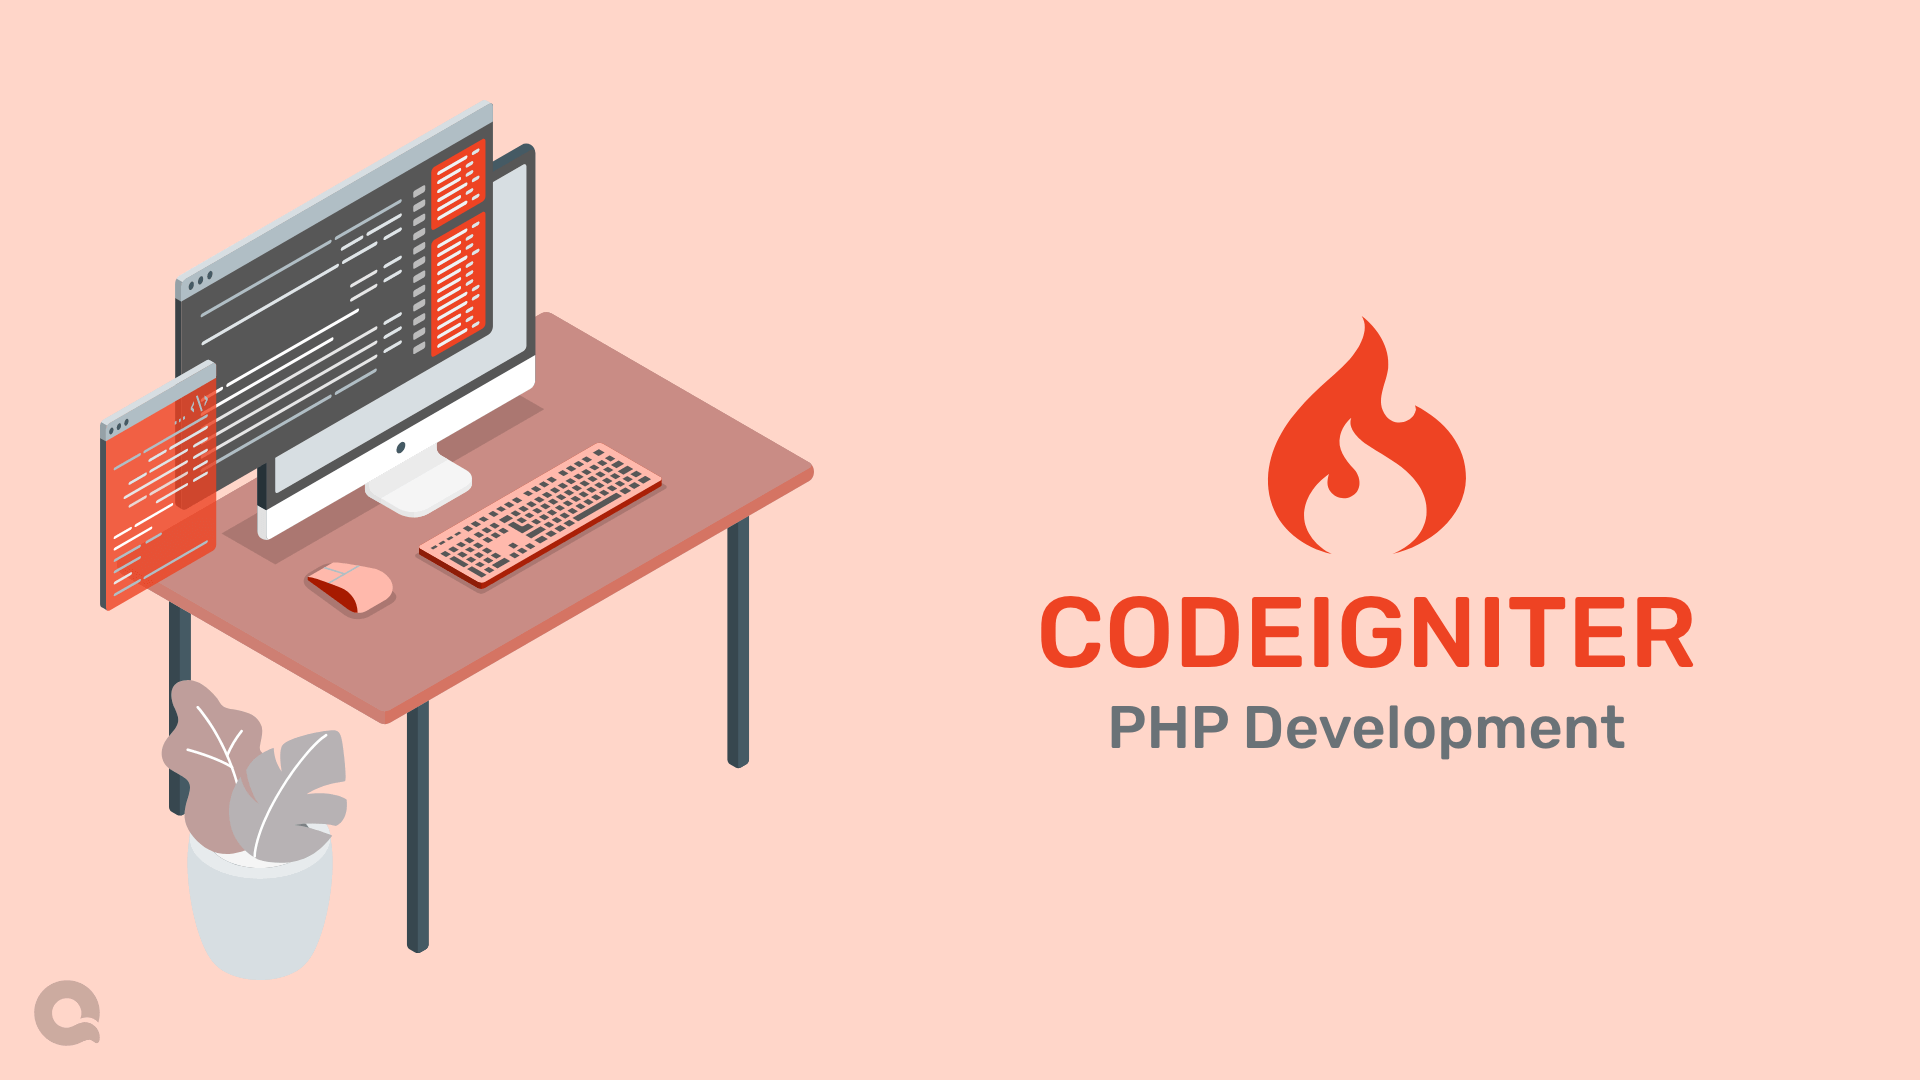 Why choose a CodeIgniter framework in PHP development